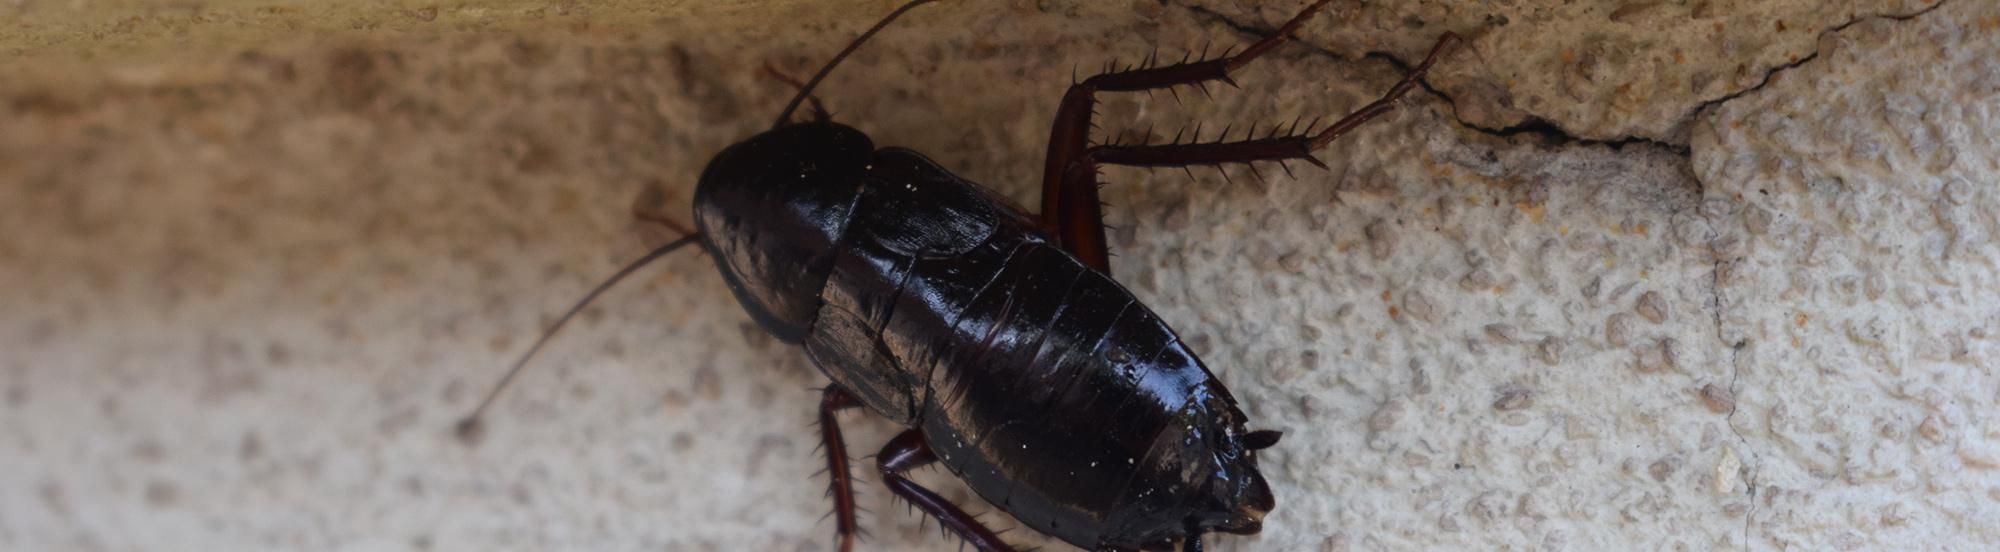 oriental cockroach inside midwest home